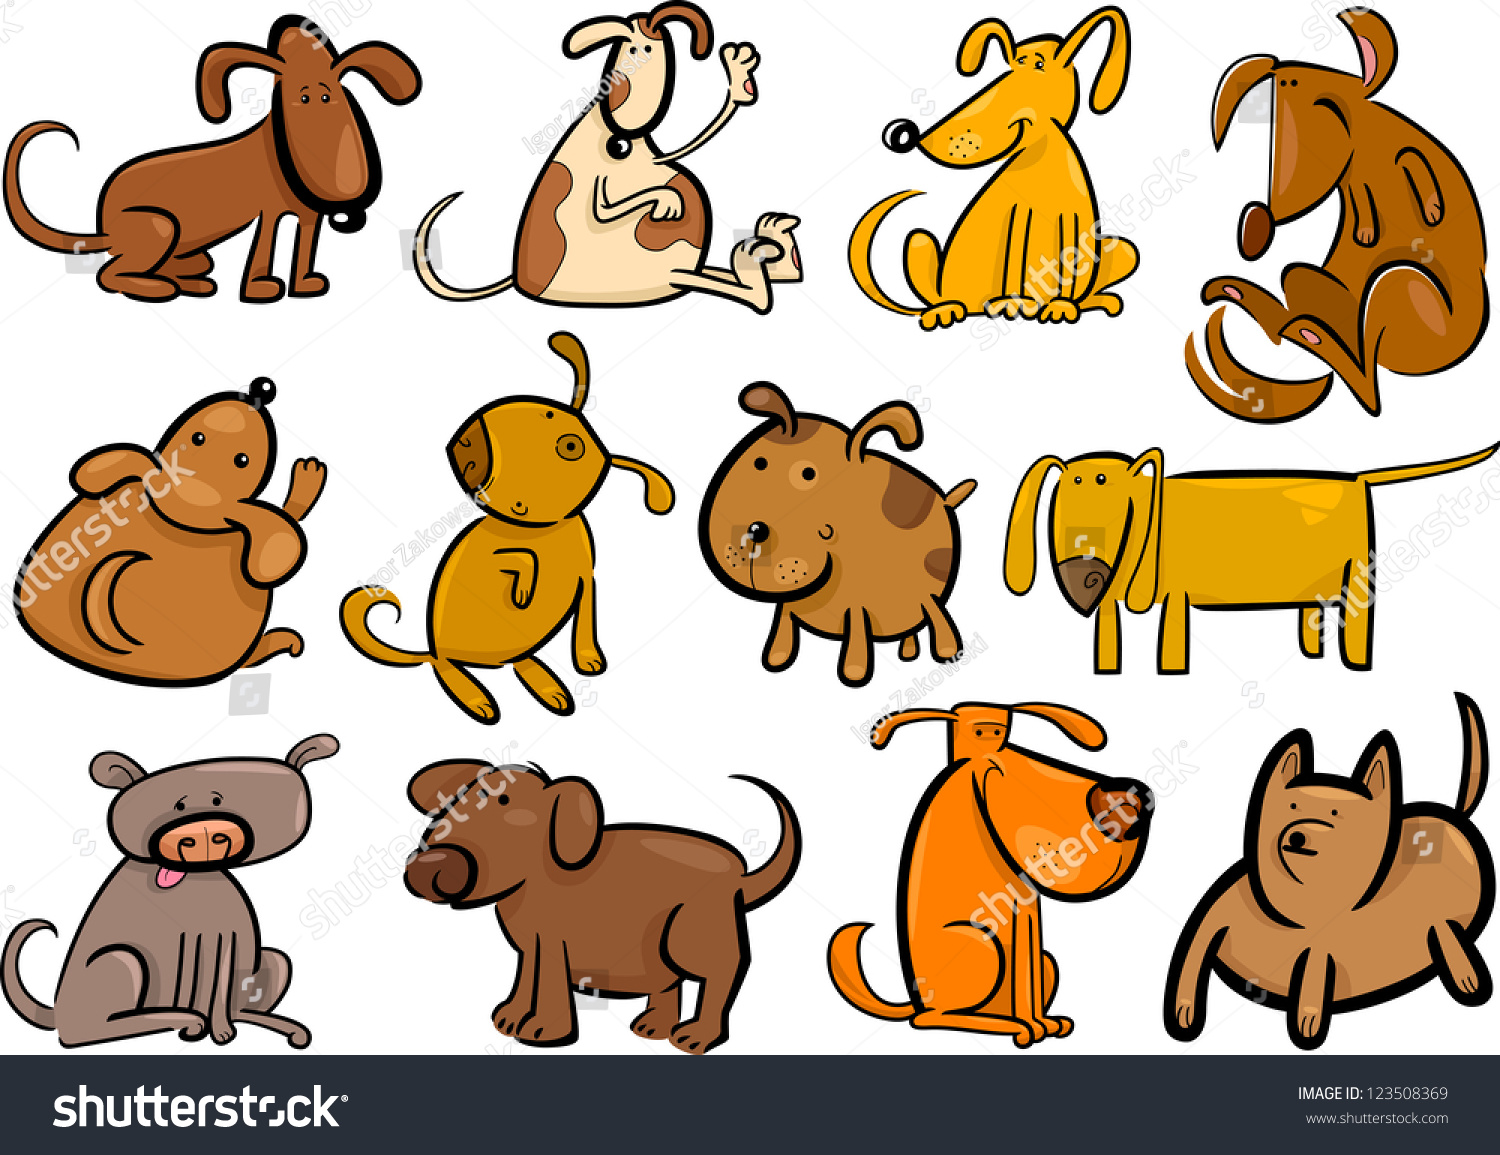 Edit Vectors Free Online - Cartoon Illu | Shutterstock Editor